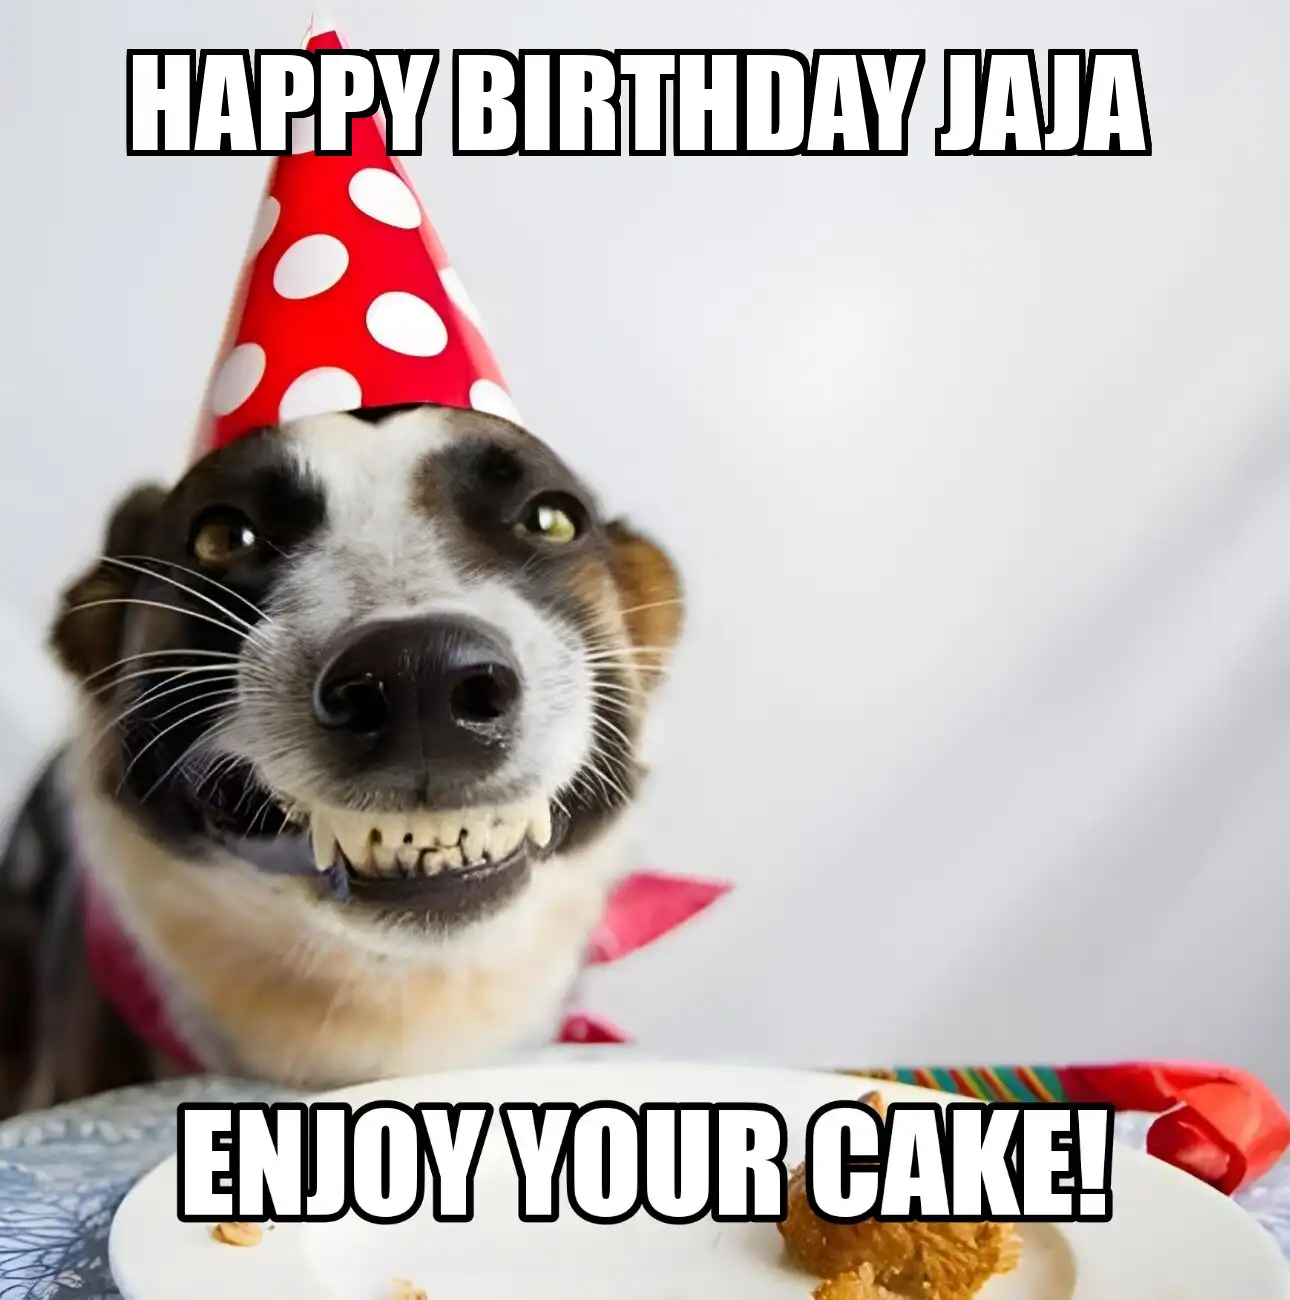 Happy Birthday Jaja Enjoy Your Cake Dog Meme